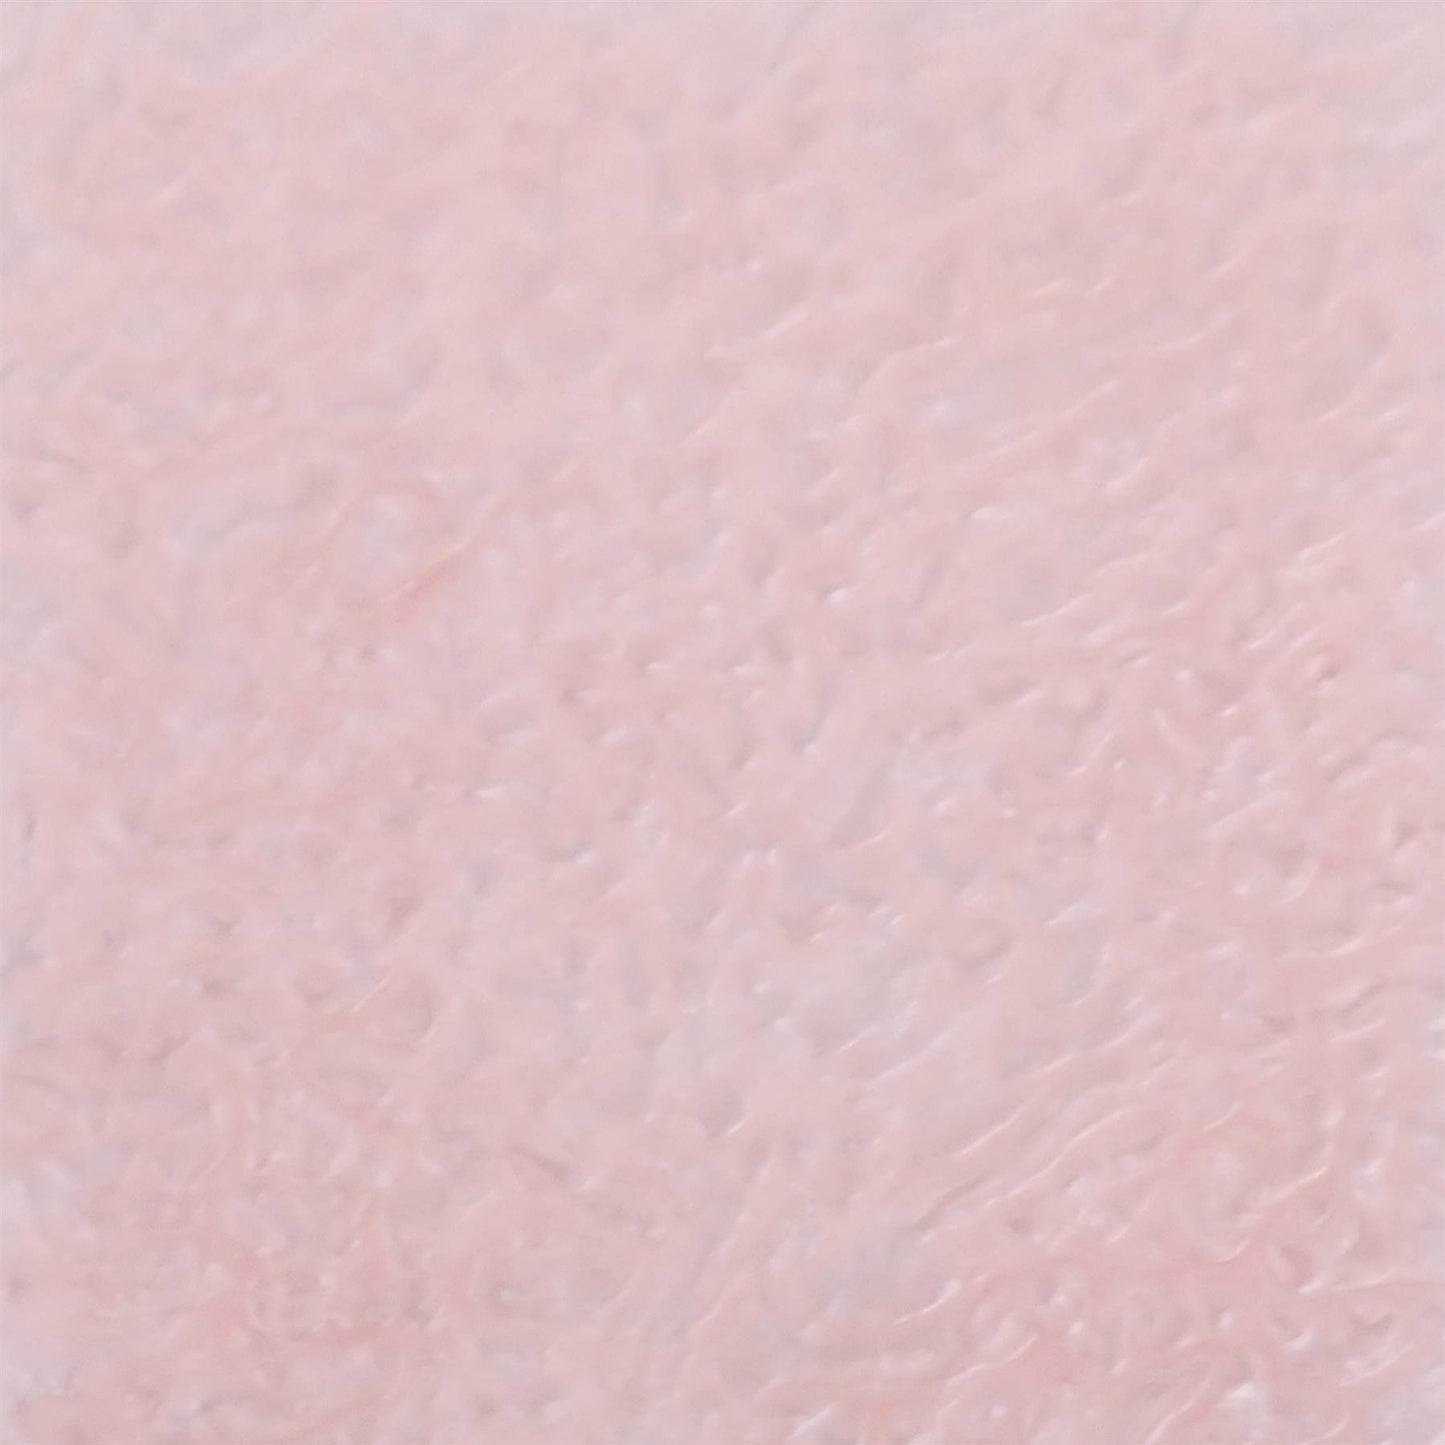 Incudo Baby Pink Lava Pearl Acrylic Sheet - 1000x600x3mm (39.4x23.62x0.12")